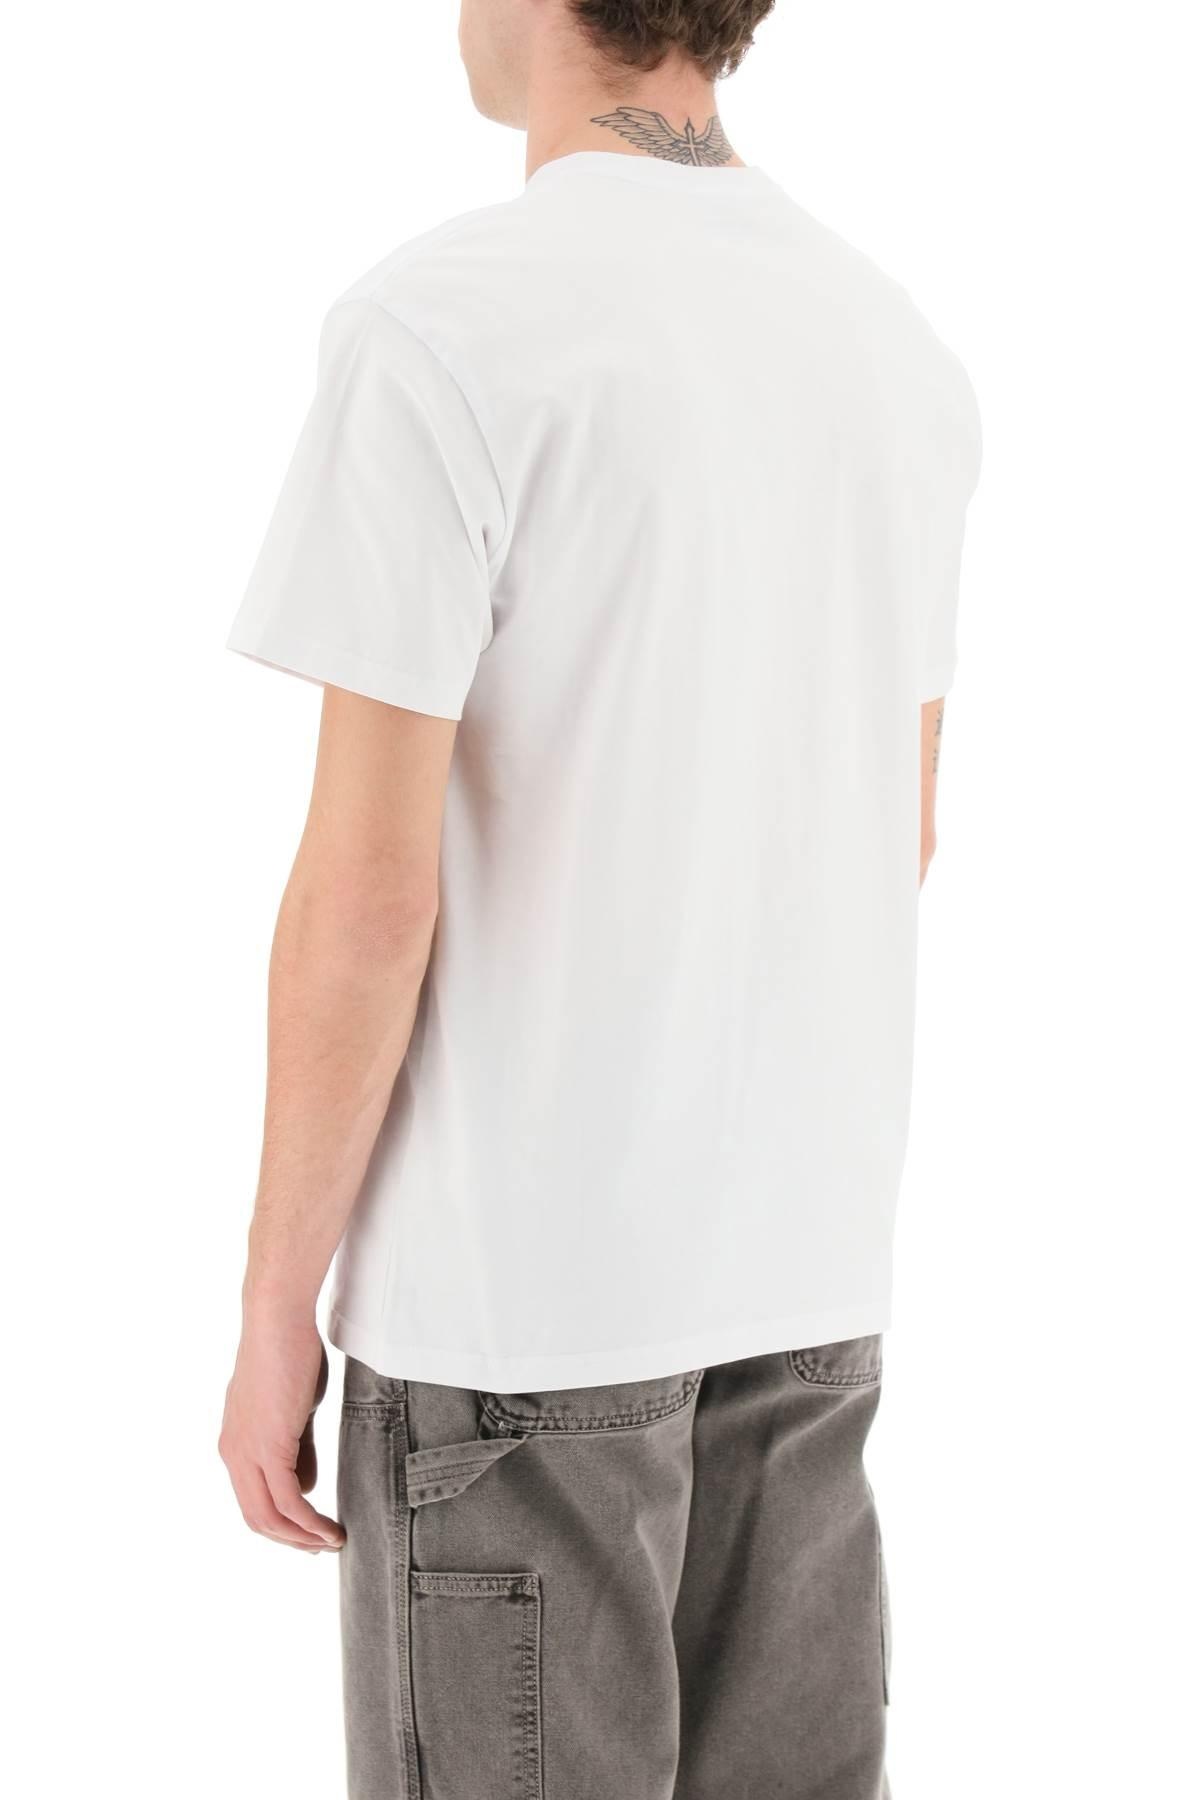 Carhartt Wip Chase Oversized T Shirt - 4